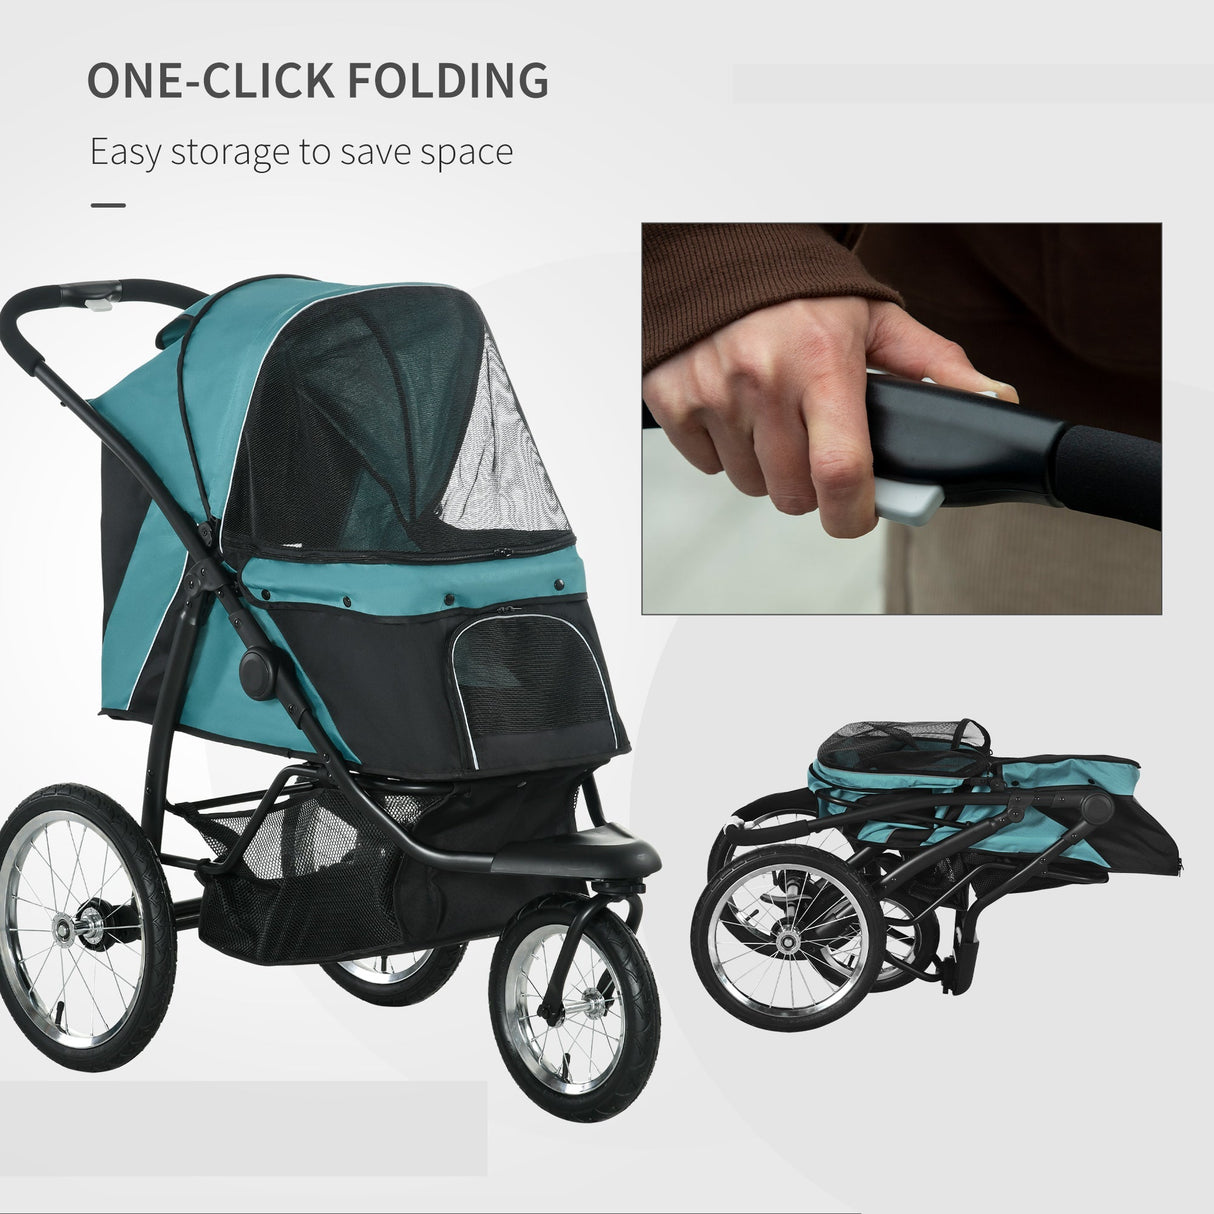 Three-Wheel Foldable Pet Stroller for Small/Medium Dogs, PawHut, Green